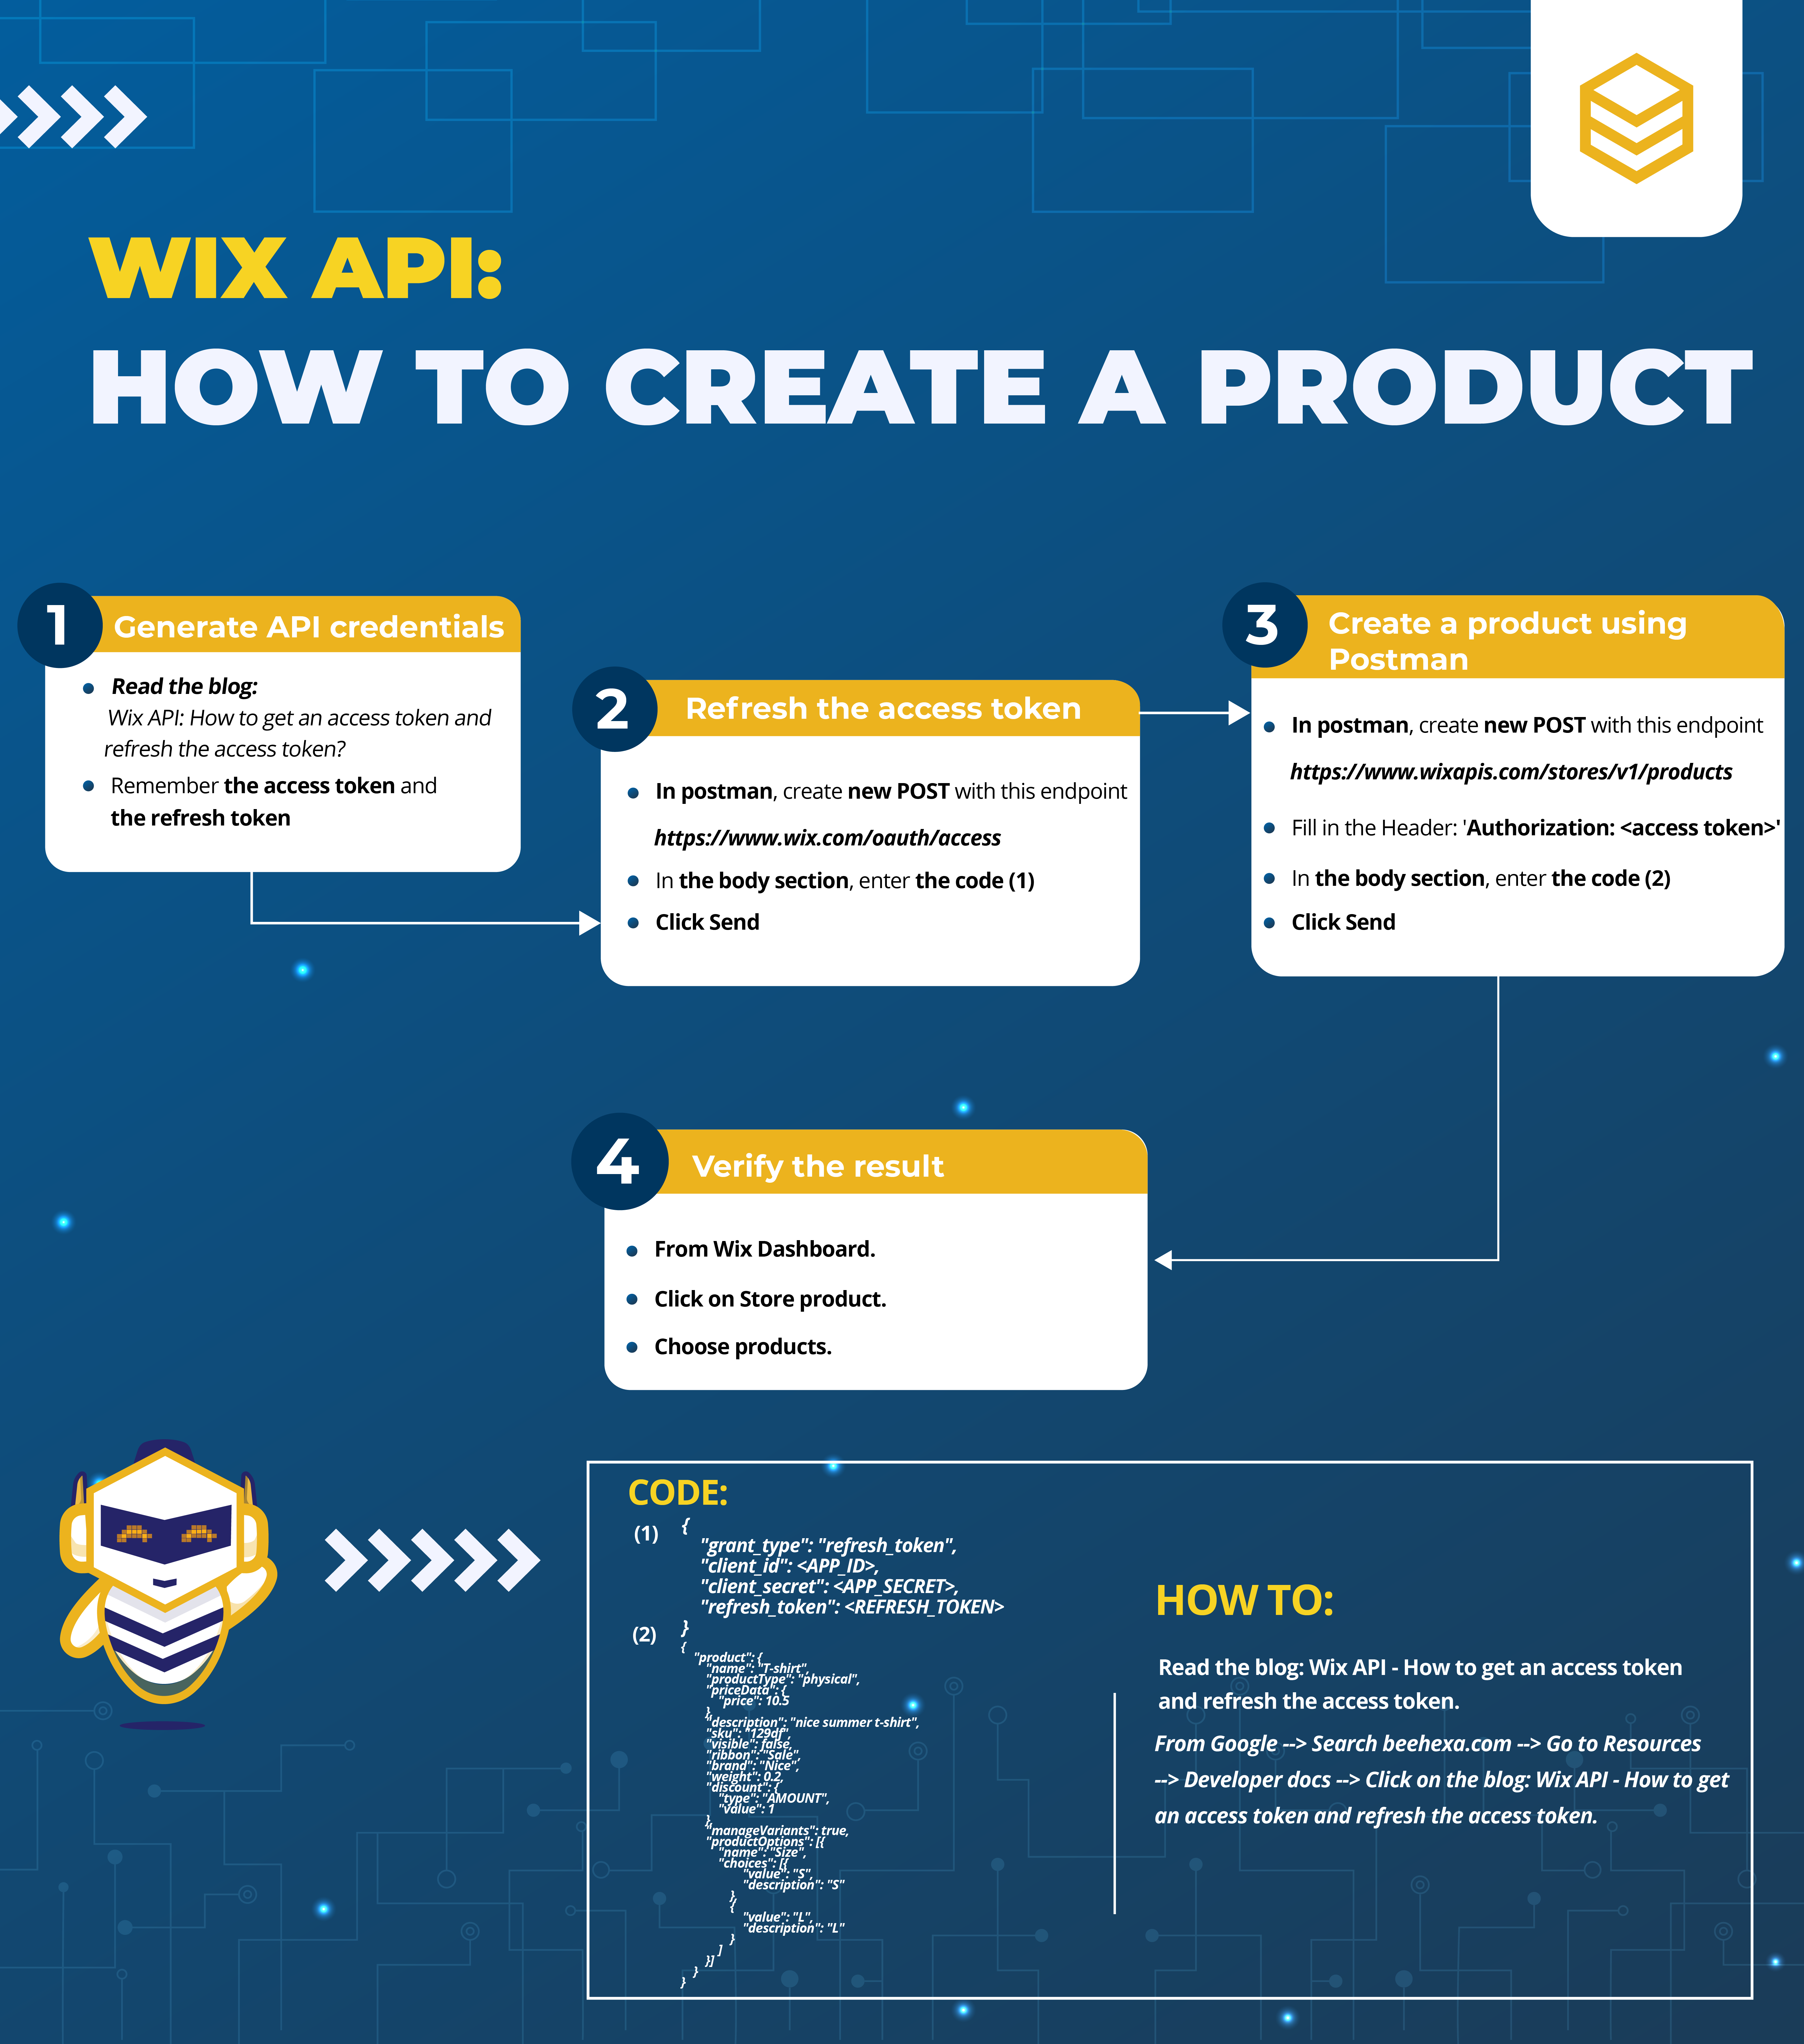 Wix API: How to create a product using Postman 